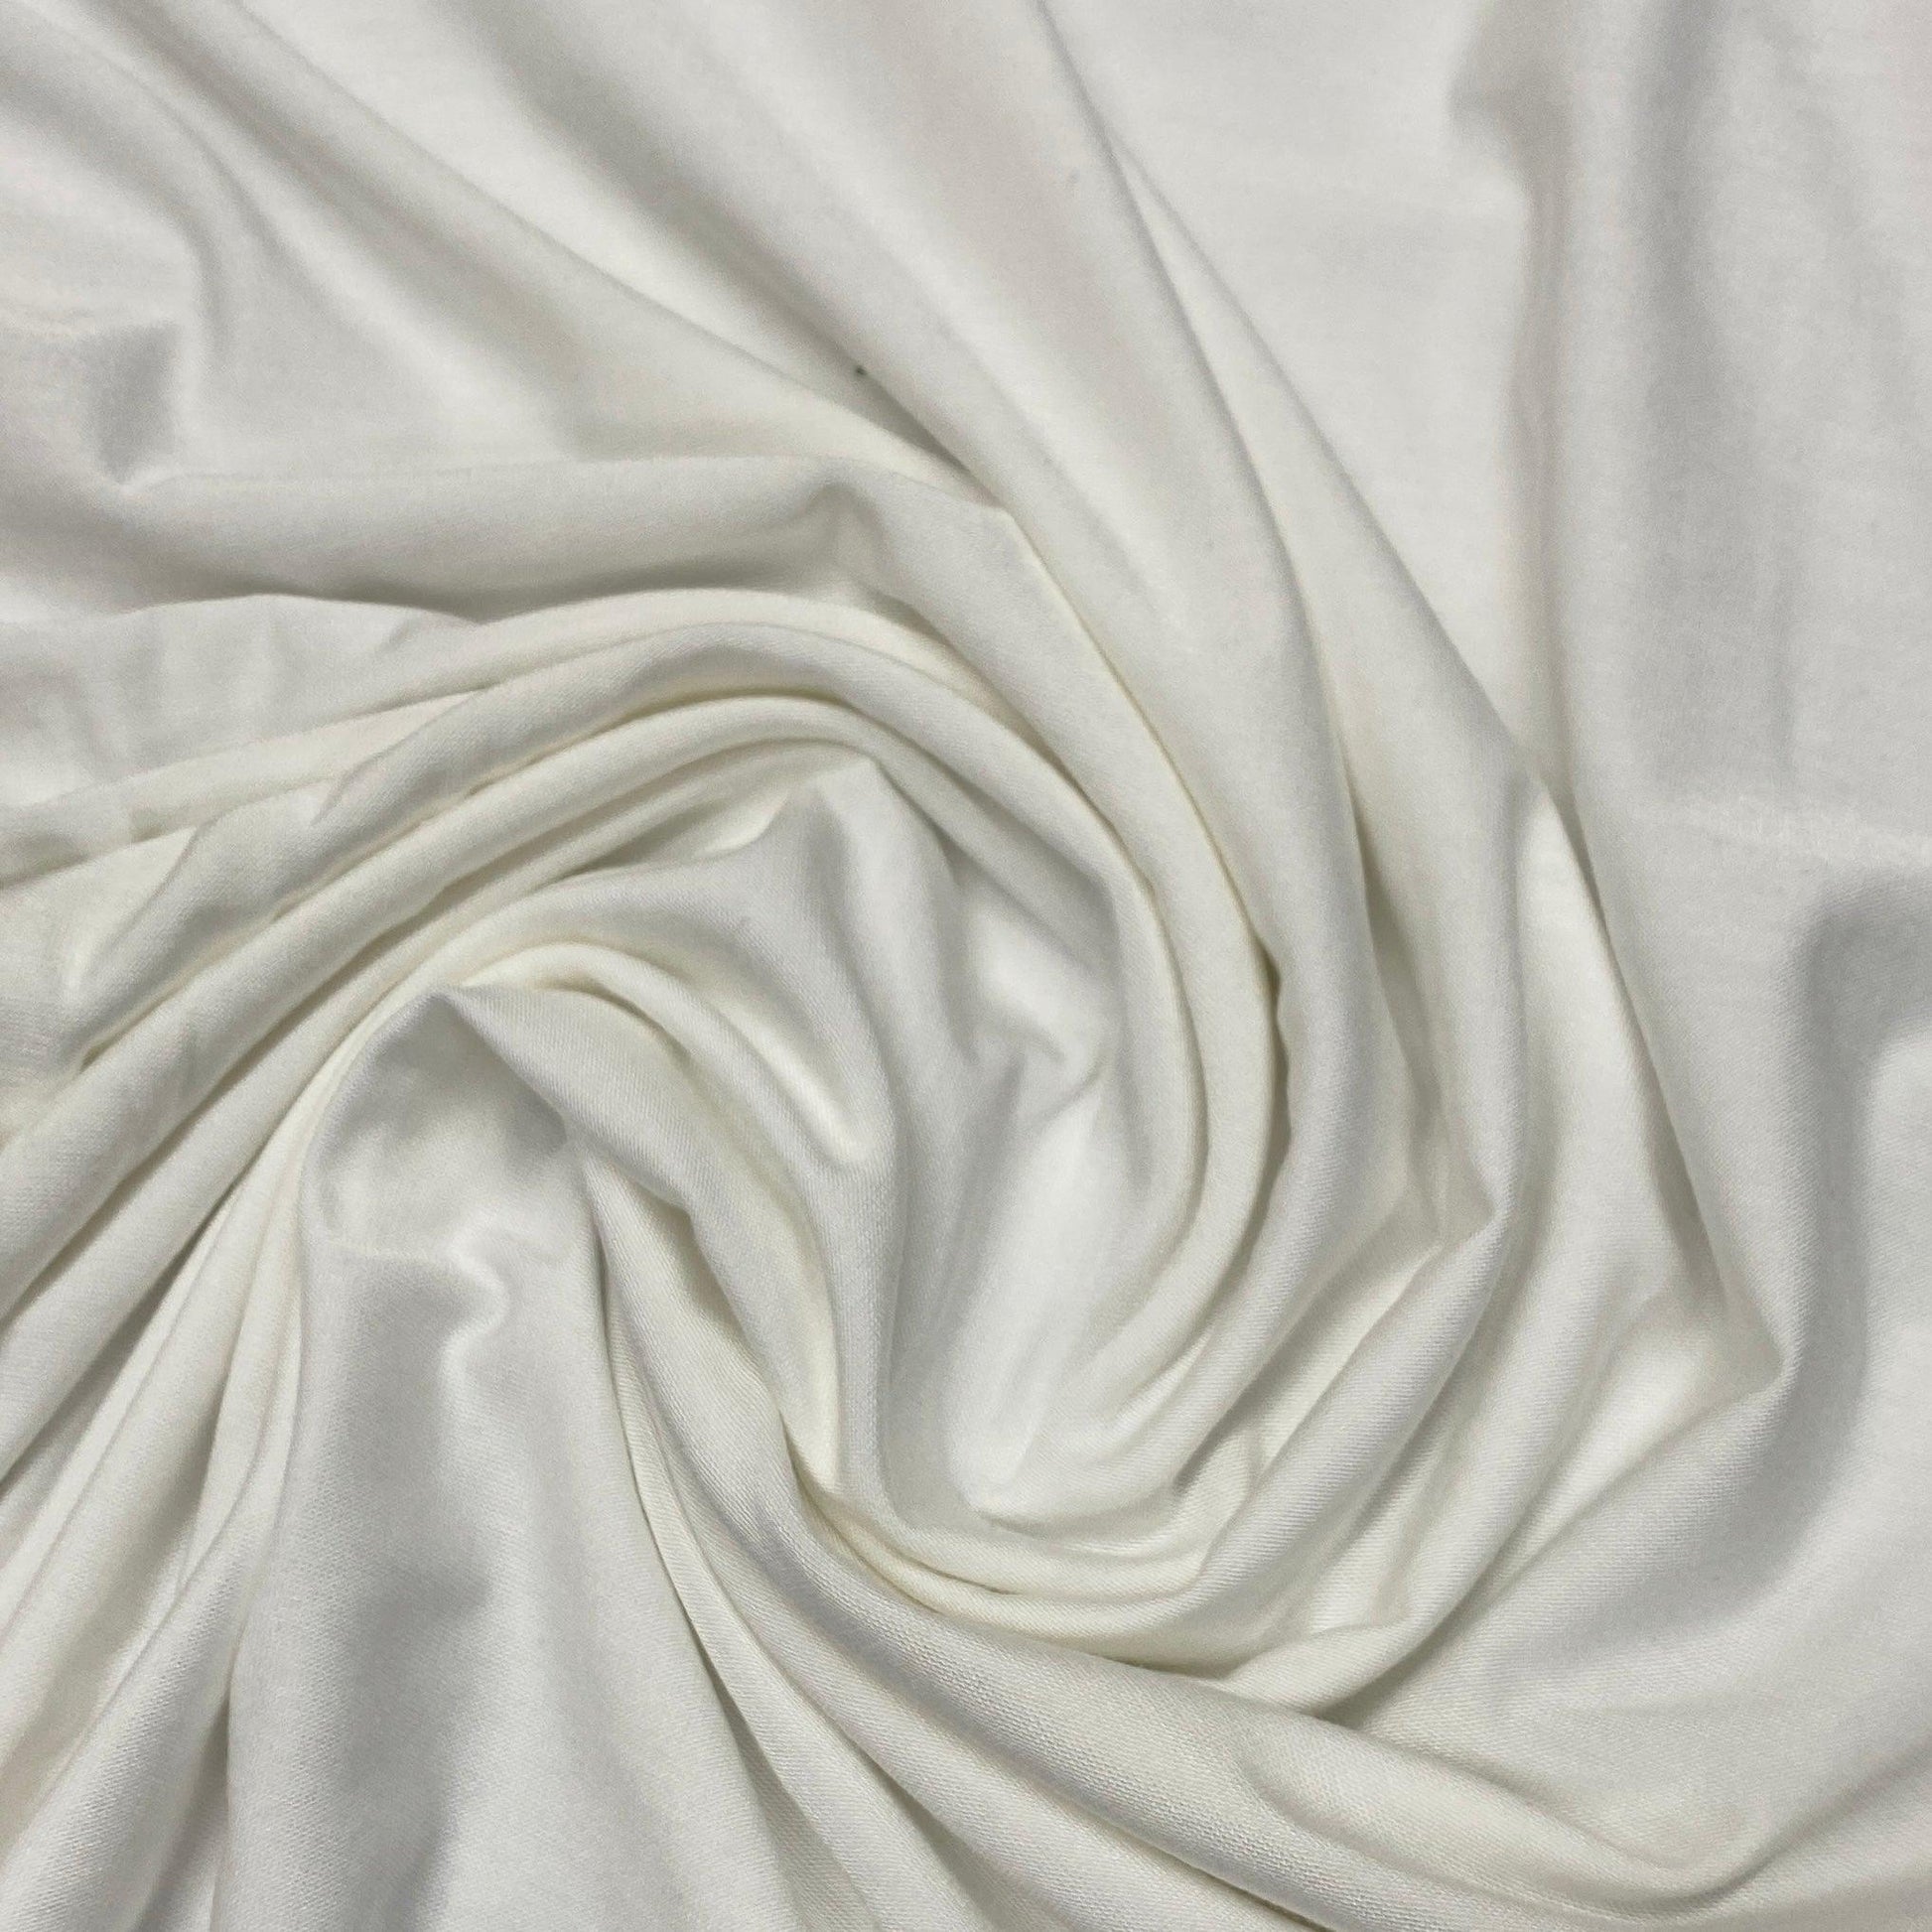 Off-White Modal/Spandex Jersey Fabric - 165 GSM - Nature's Fabrics